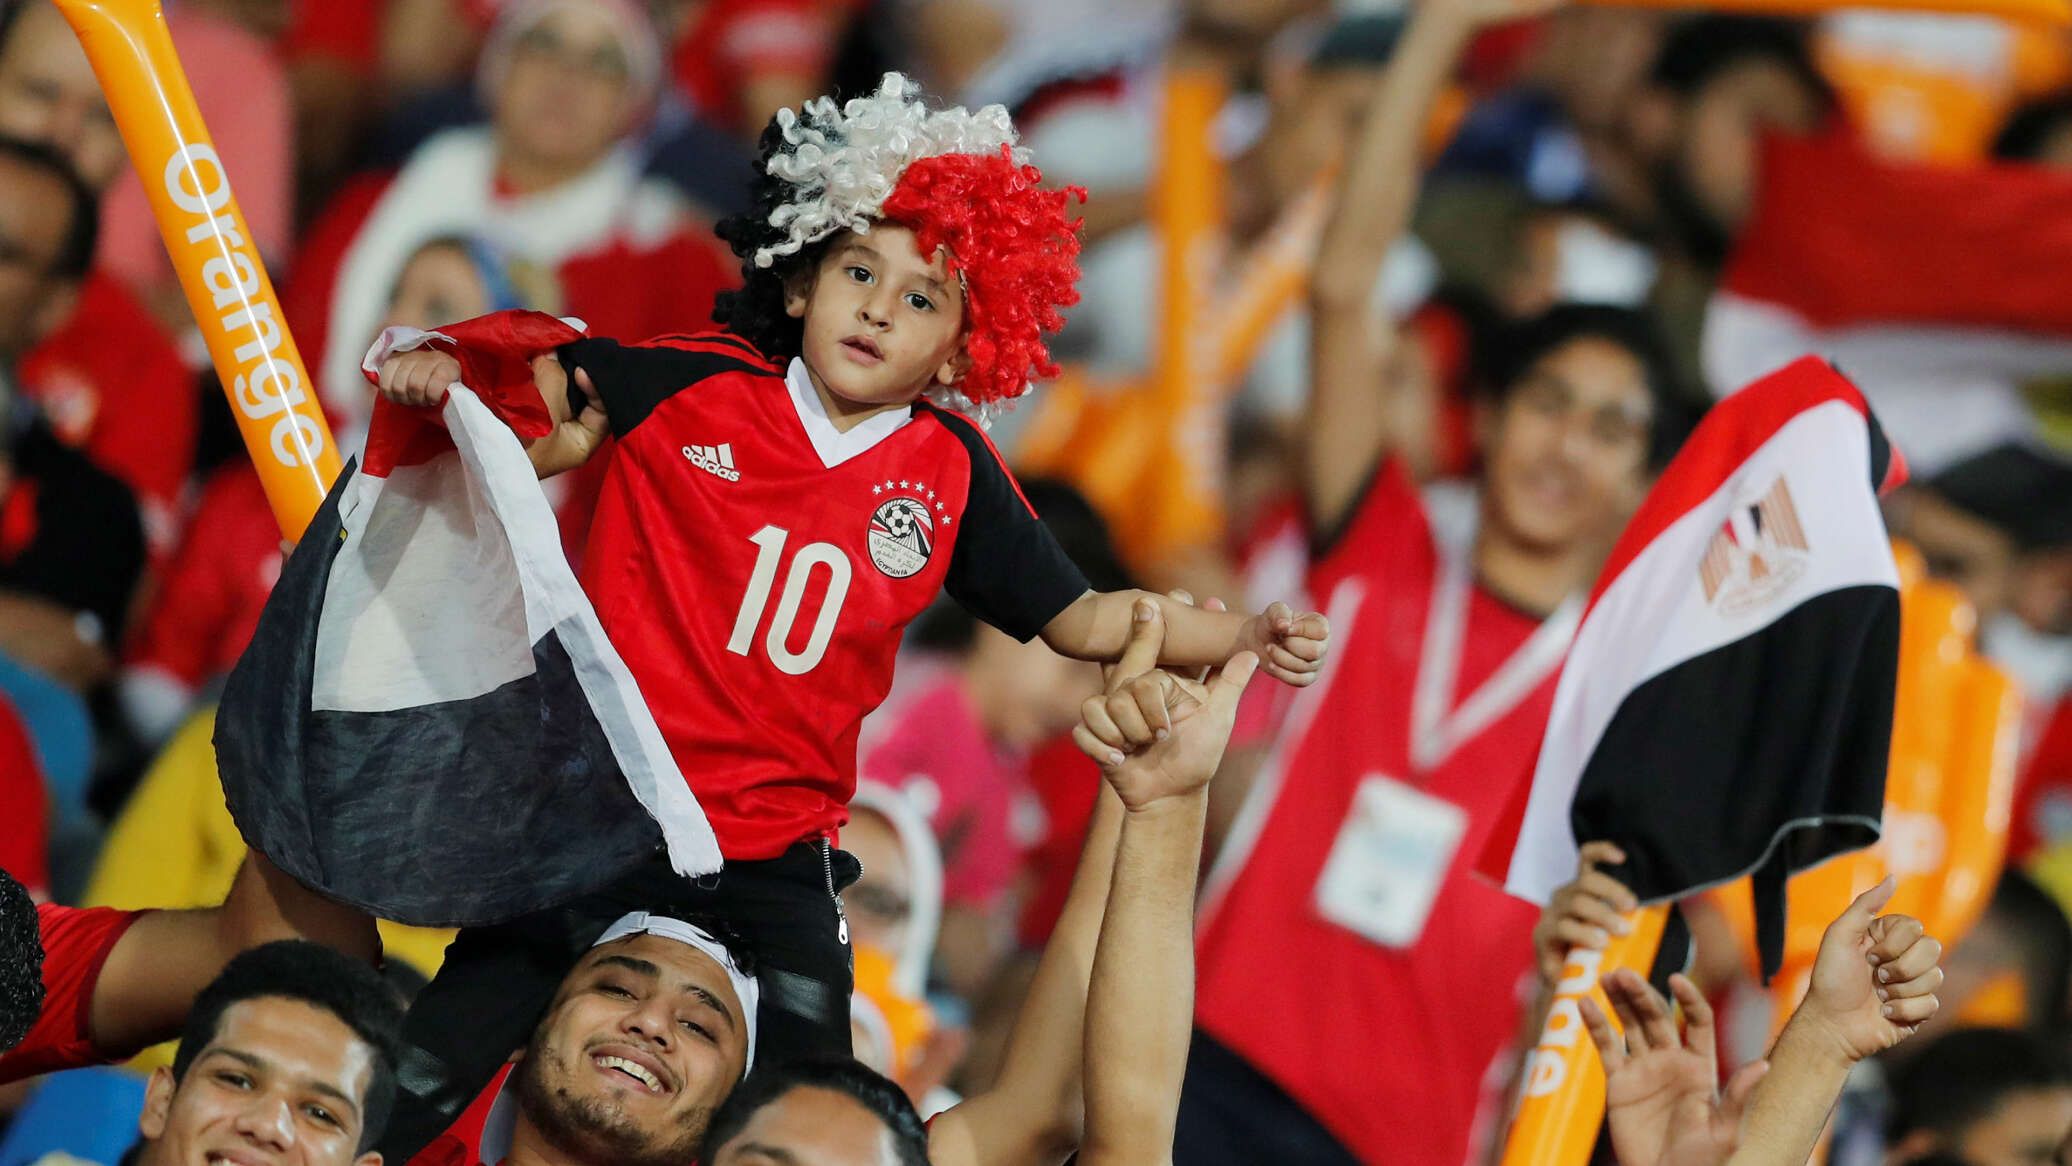 Brilliant atmosphere of sportsmanship ahead of Tunisia and Egypt showdown